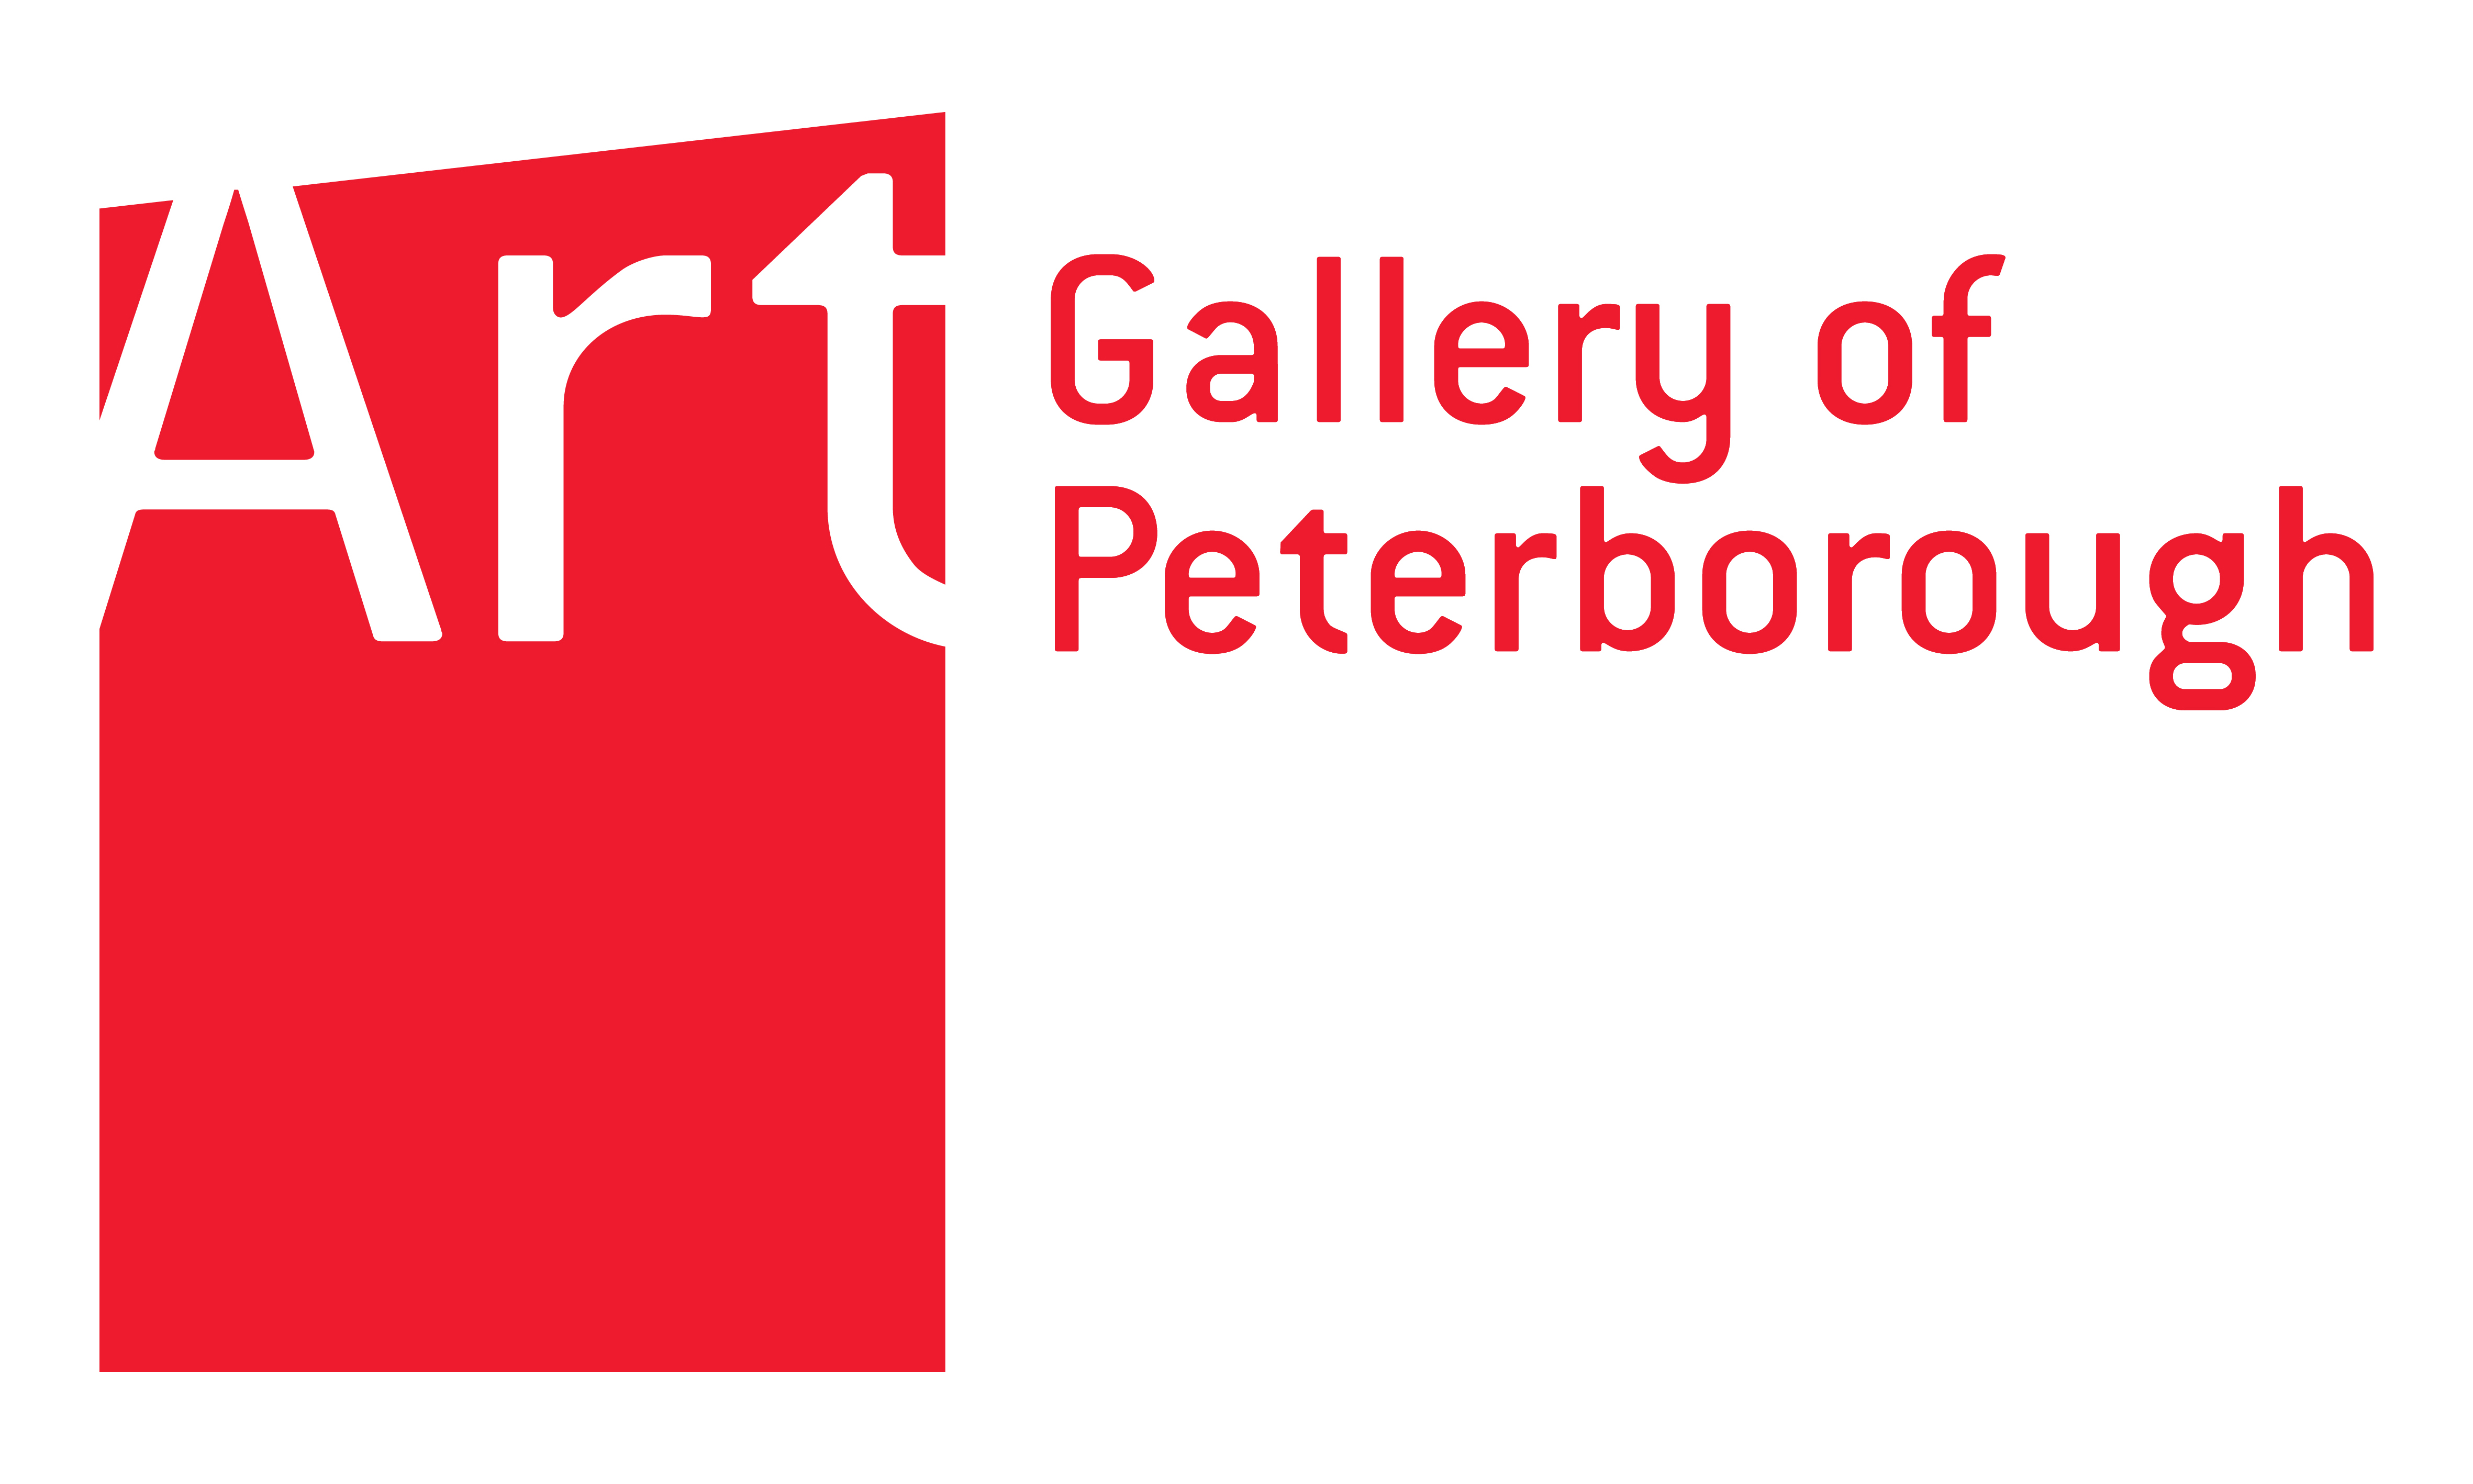 The Art Gallery of Peterborough